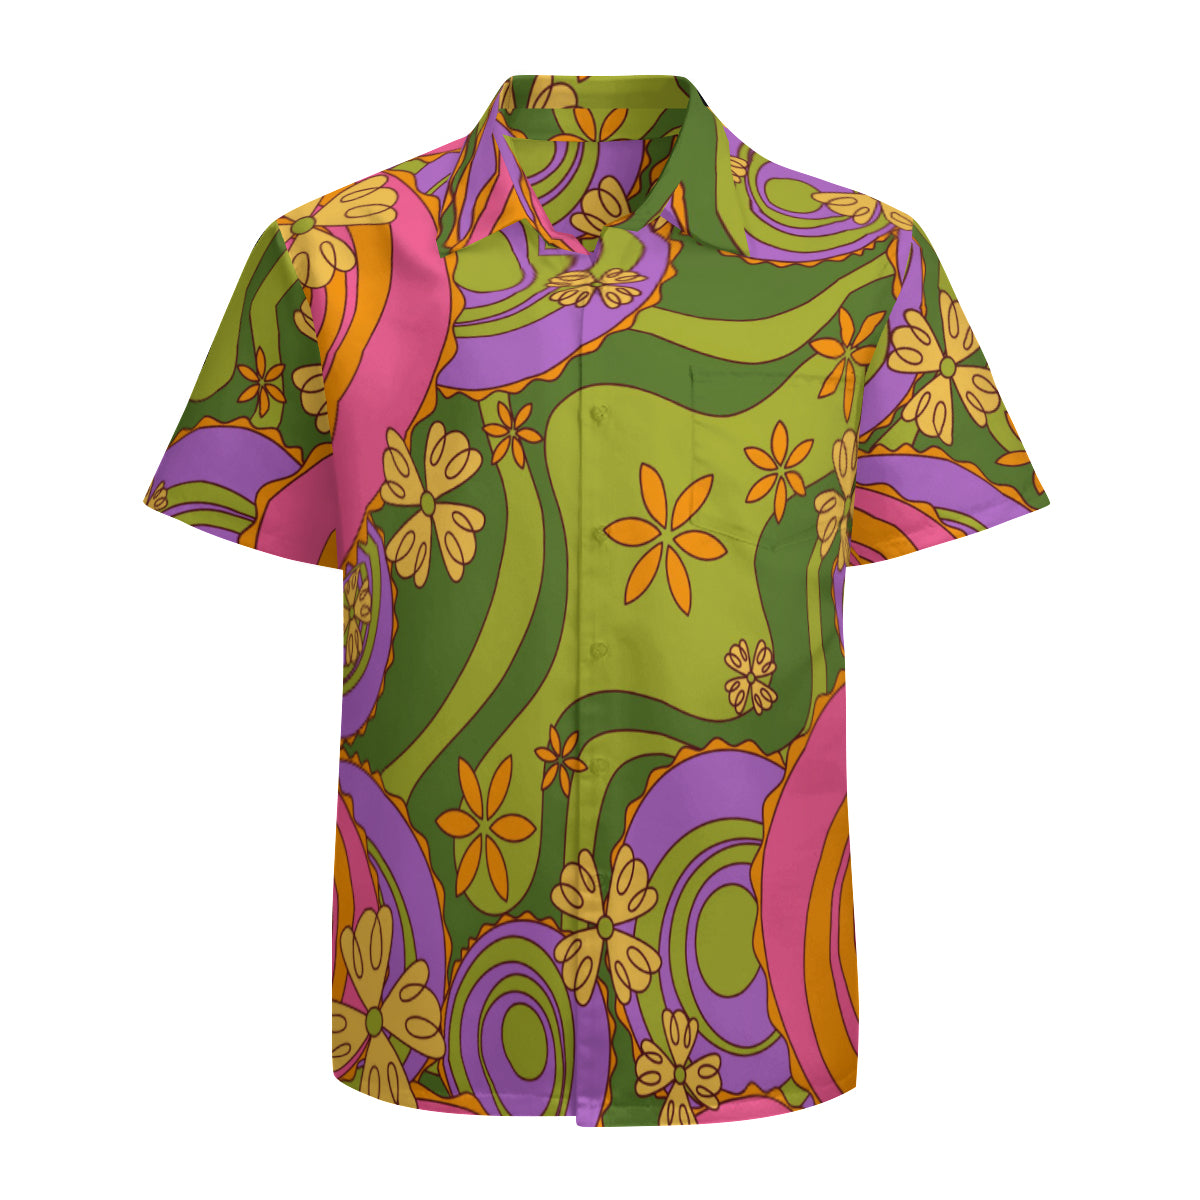 Boho Top Men, 70s clothing men, 70s shirt style, Floral Shirt Men, Hippie shirt, Neon Pink Green top, 70s Style Shirt Men, Bohemian Shirt